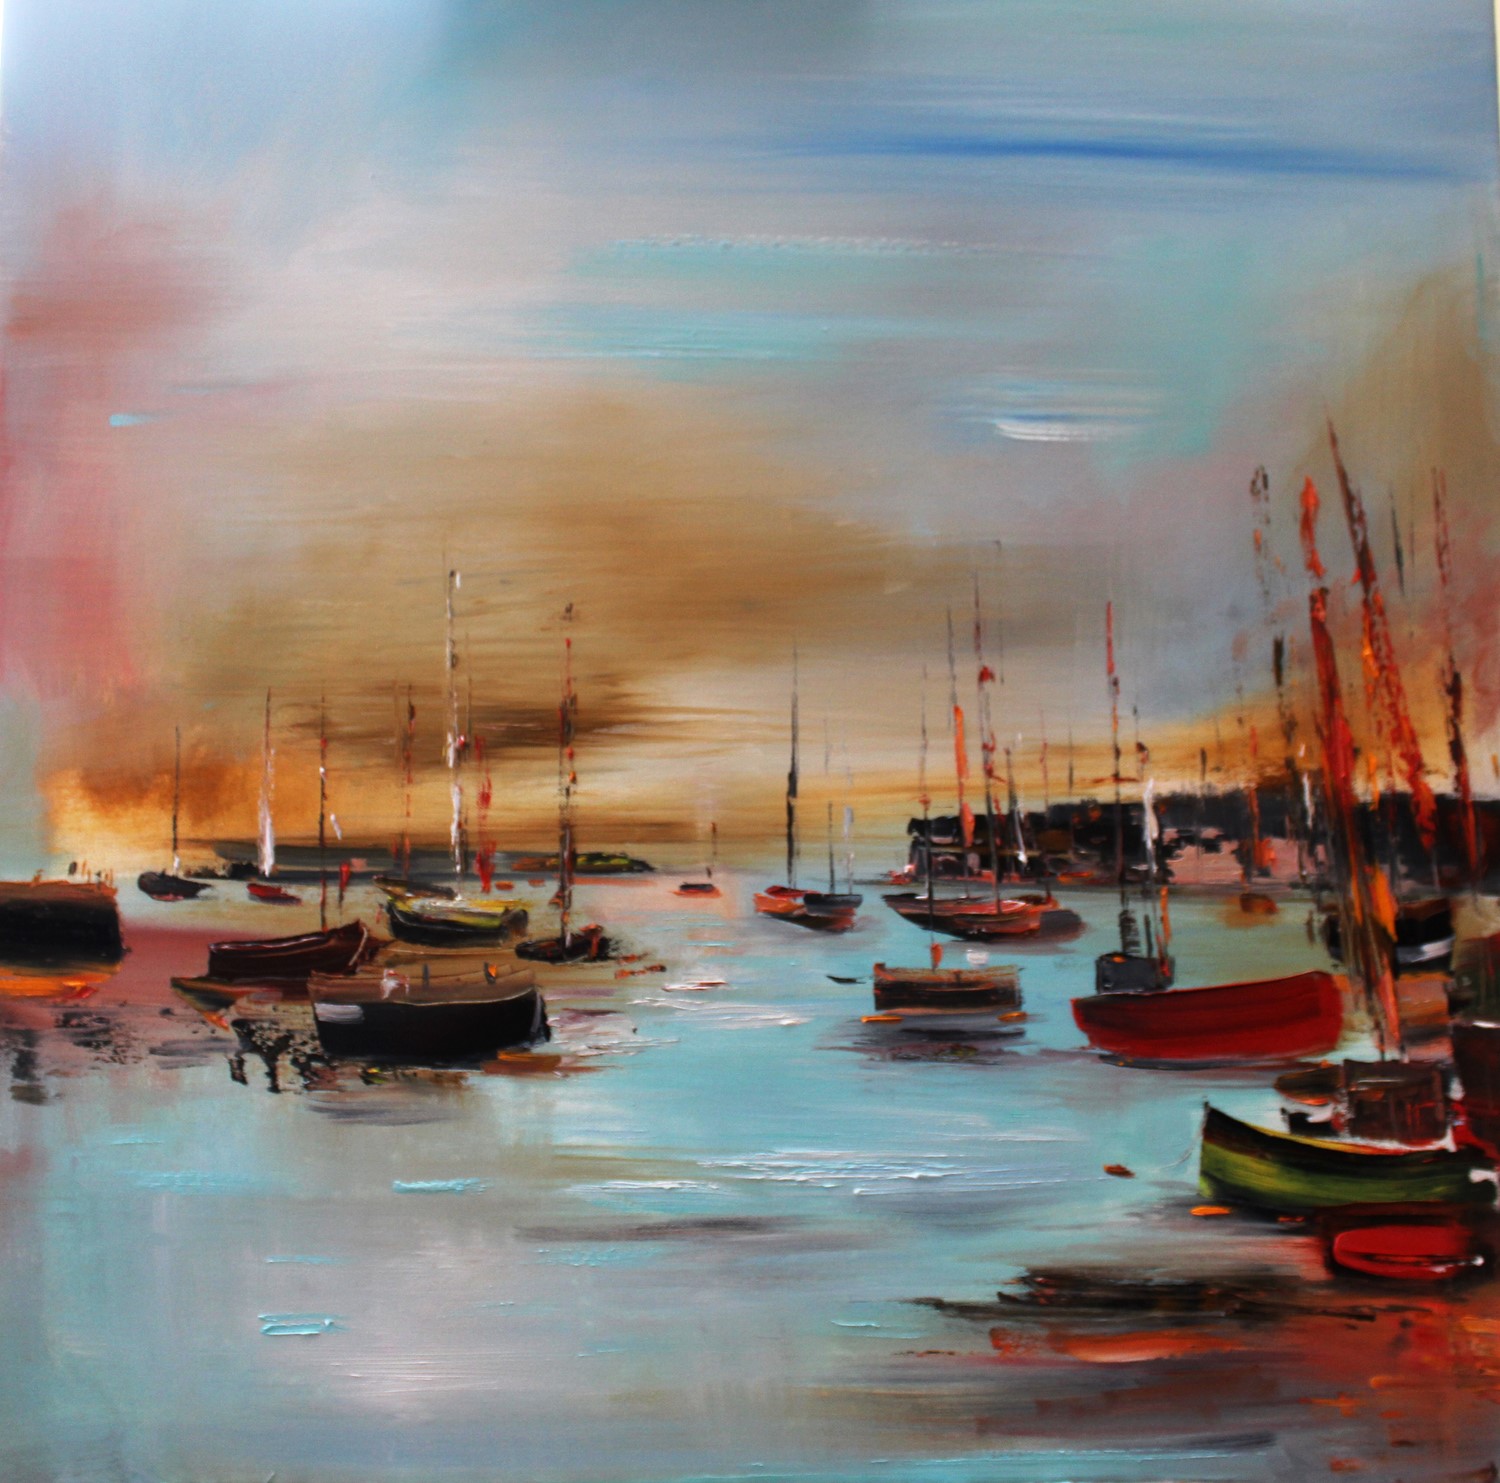 'Boats Ashore' by artist Rosanne Barr